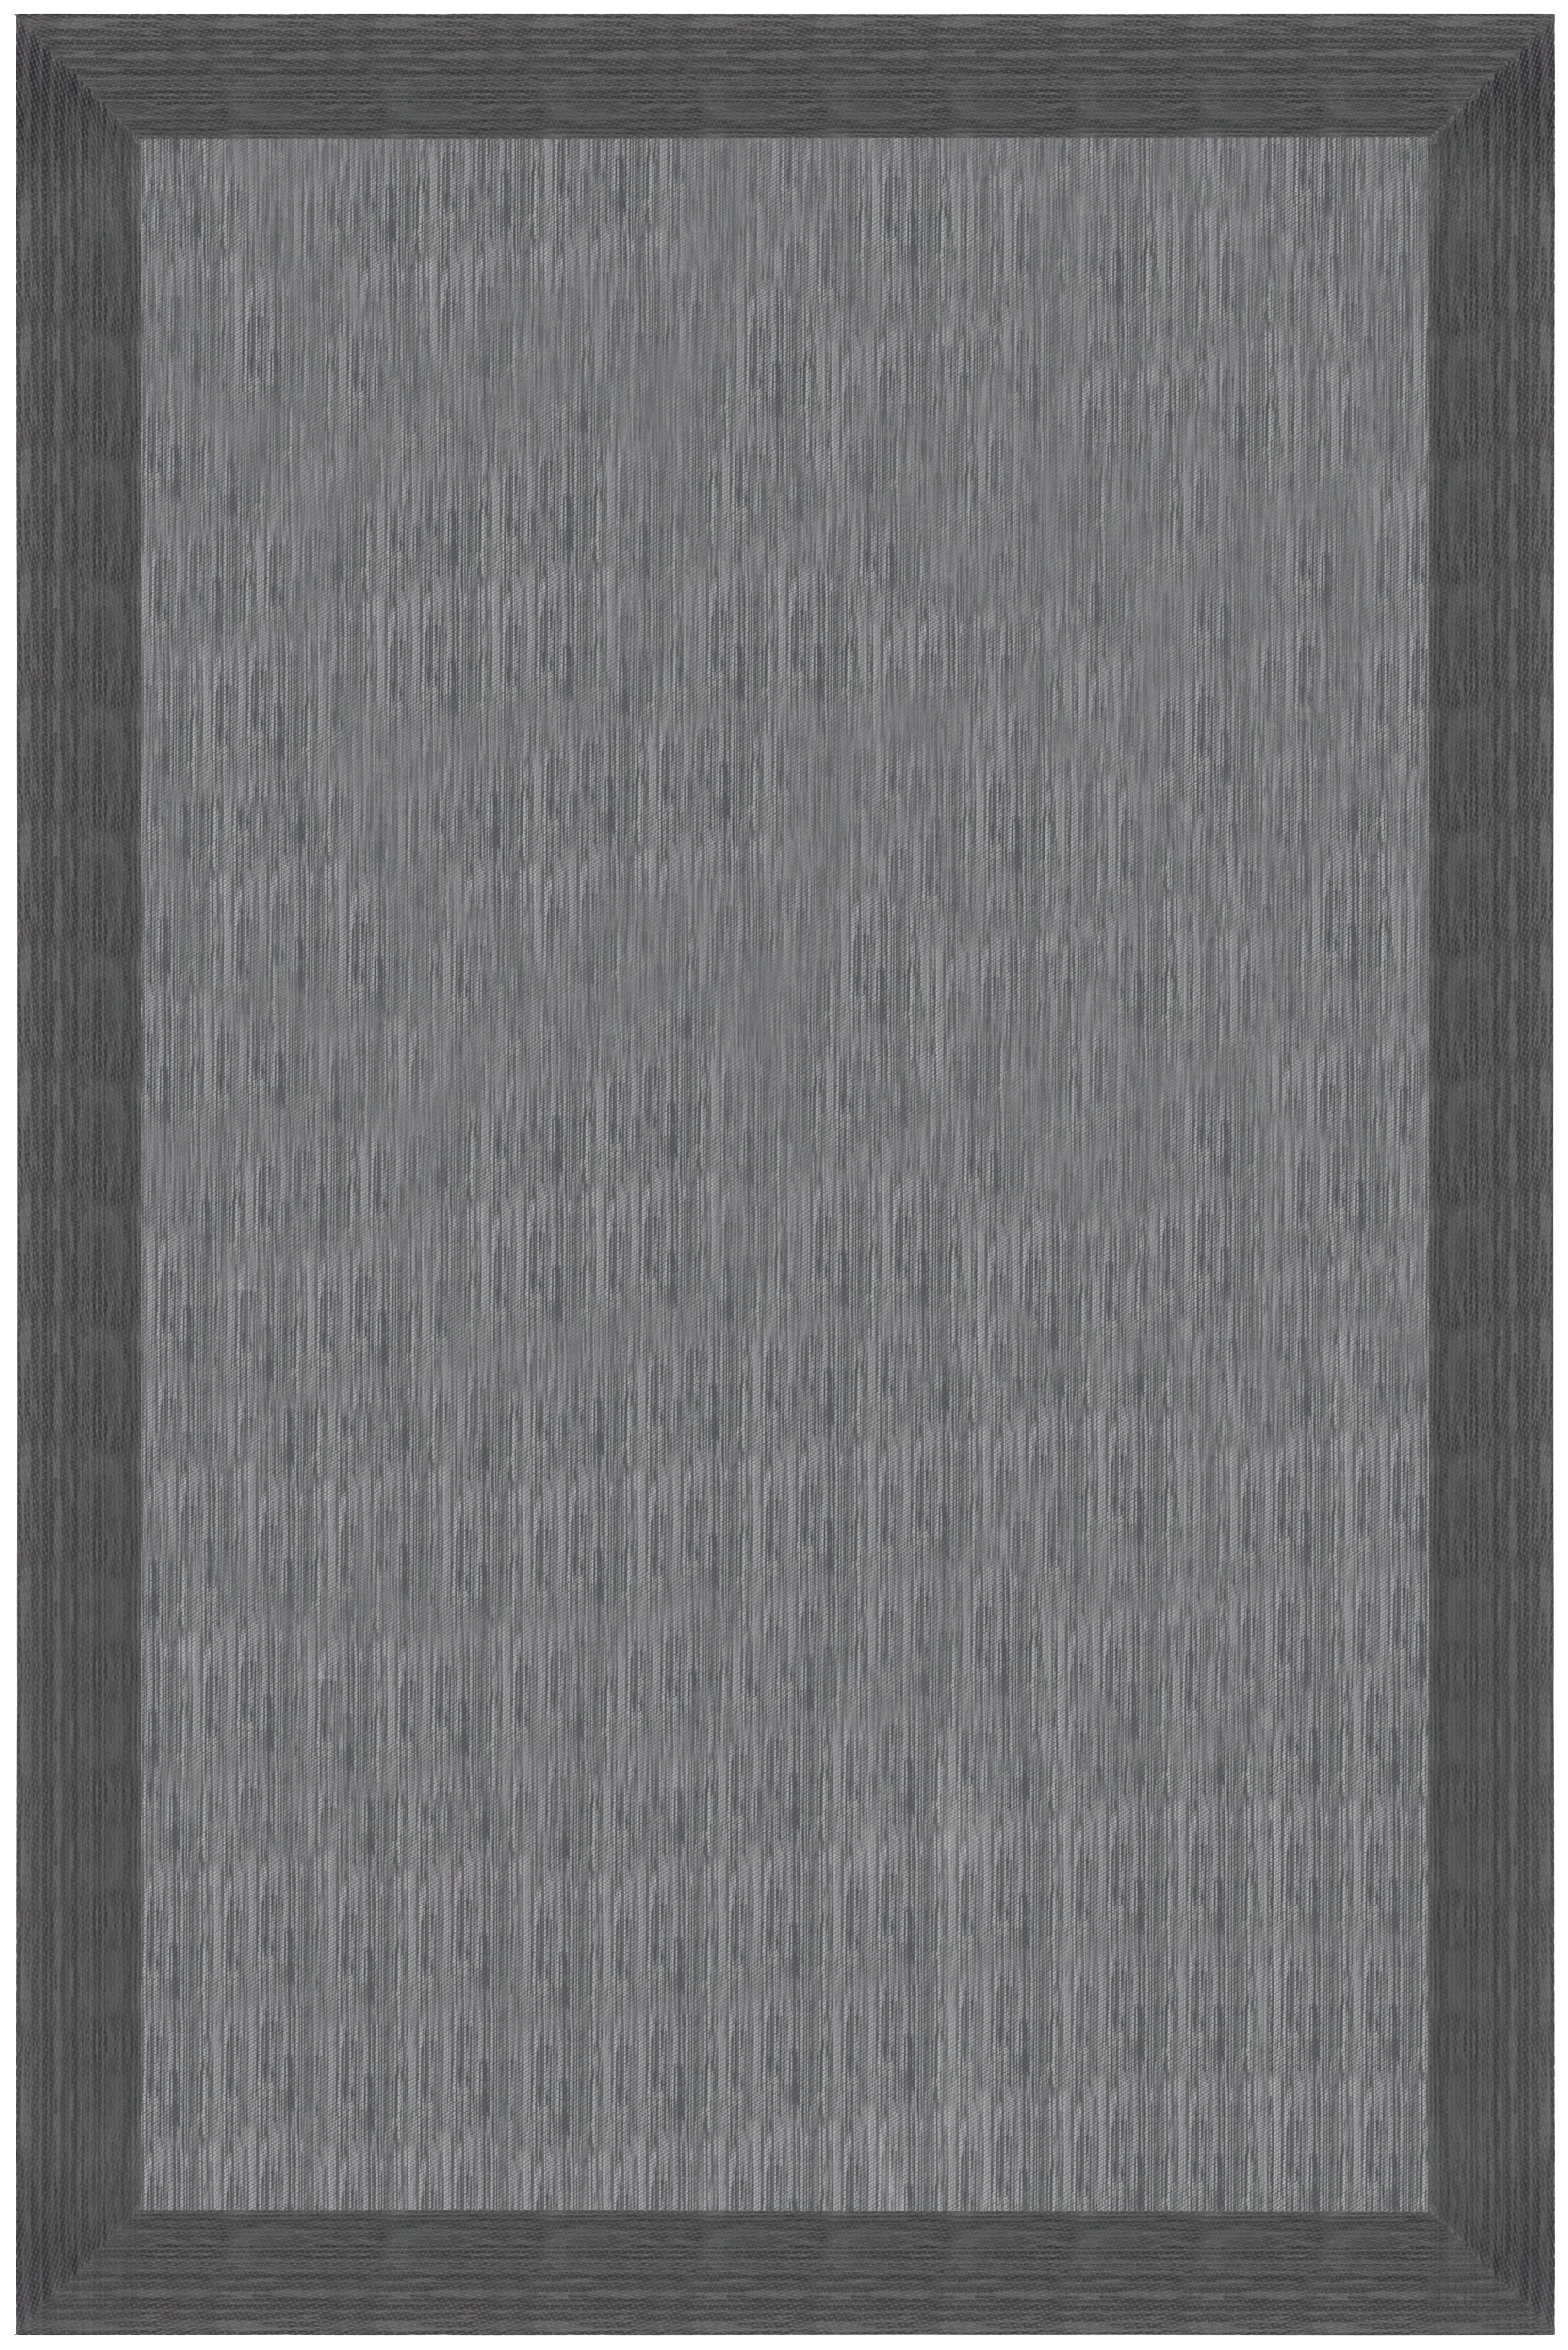 Alfombra exterior/interior pvc teplon ++ archi gris plata cuadrada 120x120cm